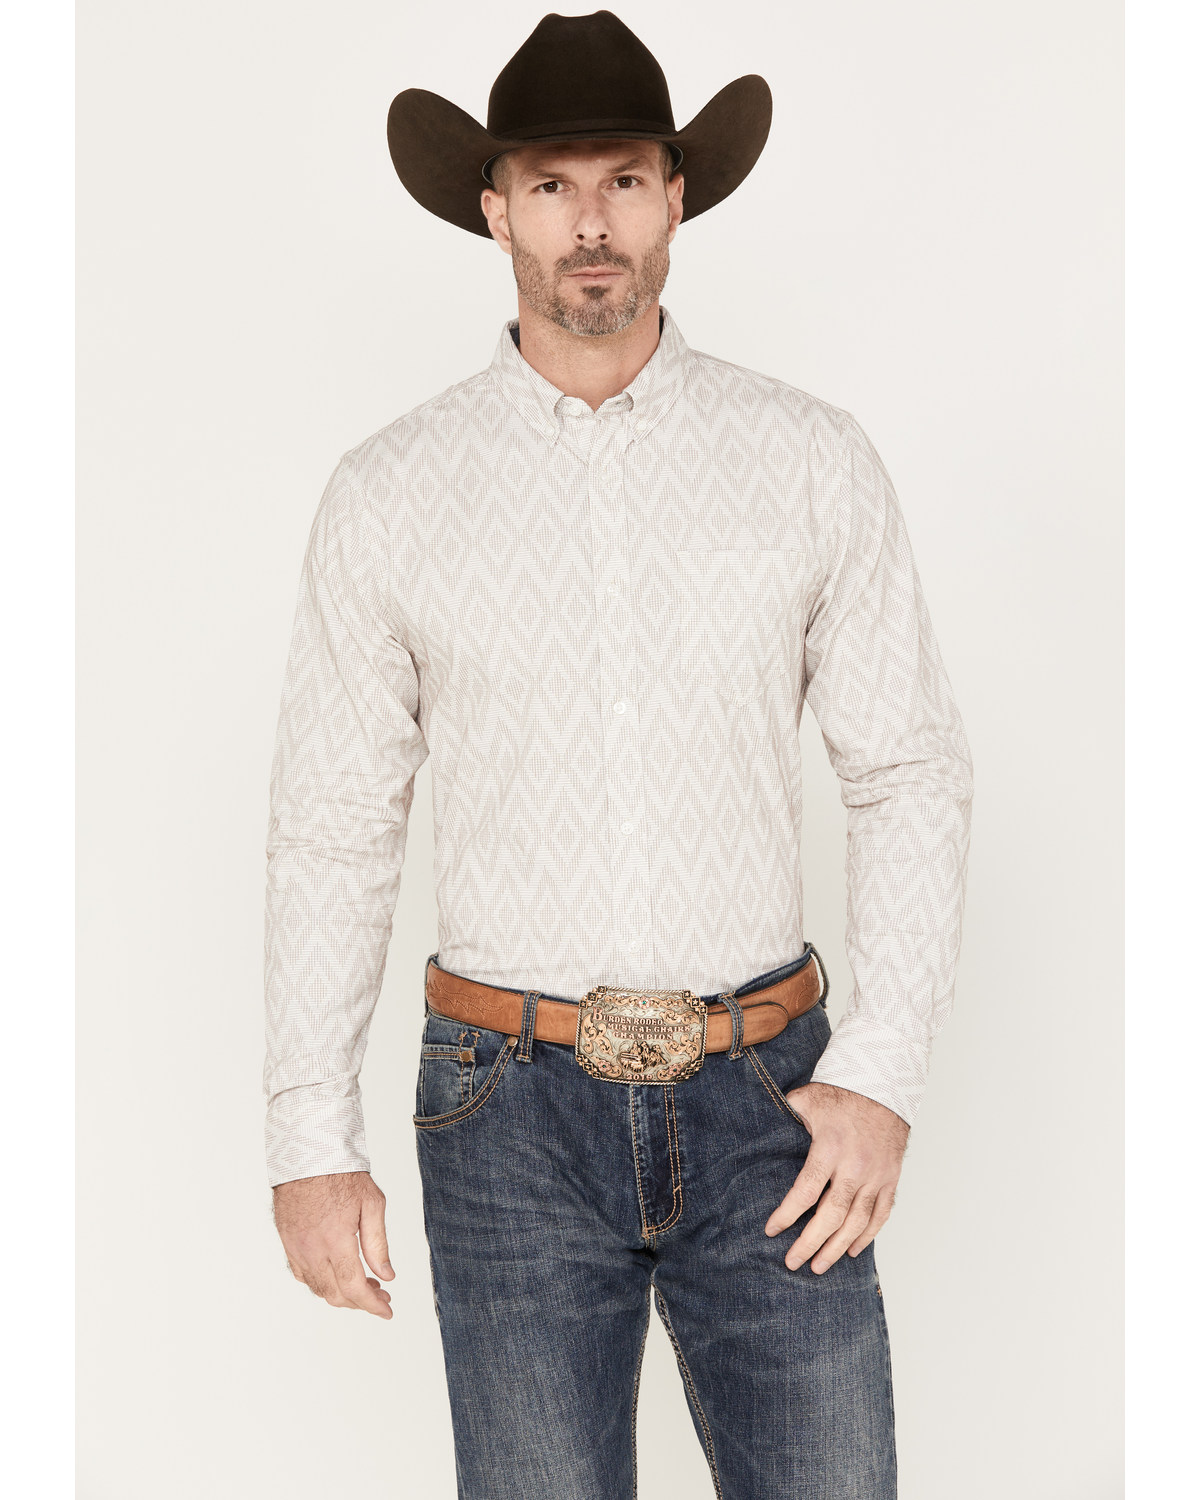 Cody James Men's Accent Geo Print Long Sleeve Button Down Shirt